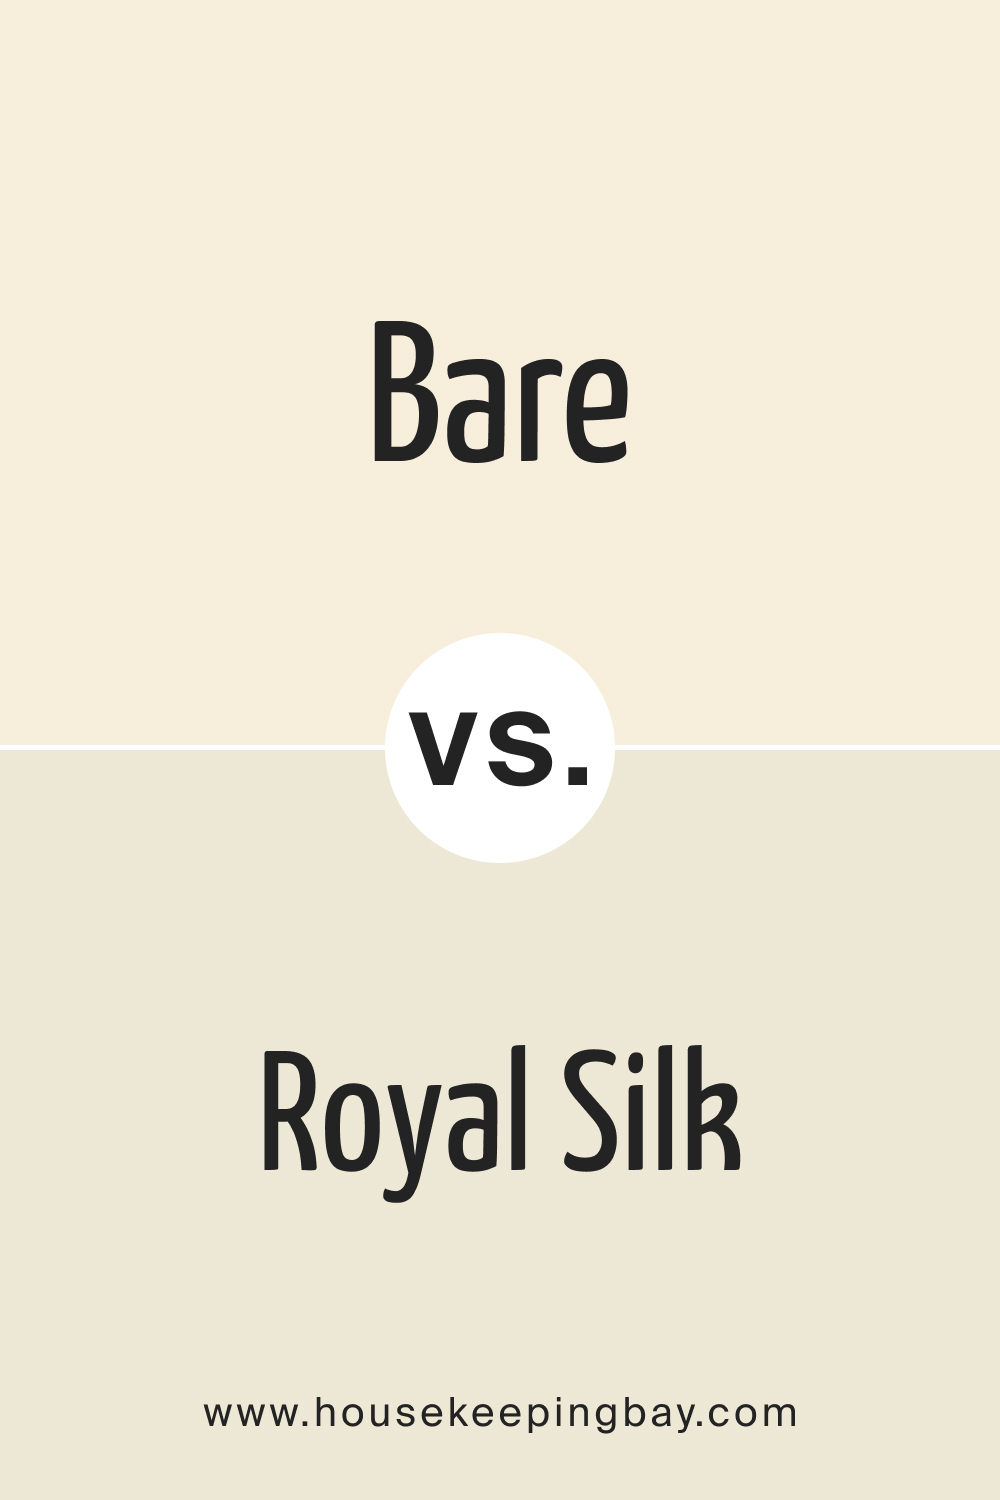 Bare OC 98 vs. BM Royal Silk 939